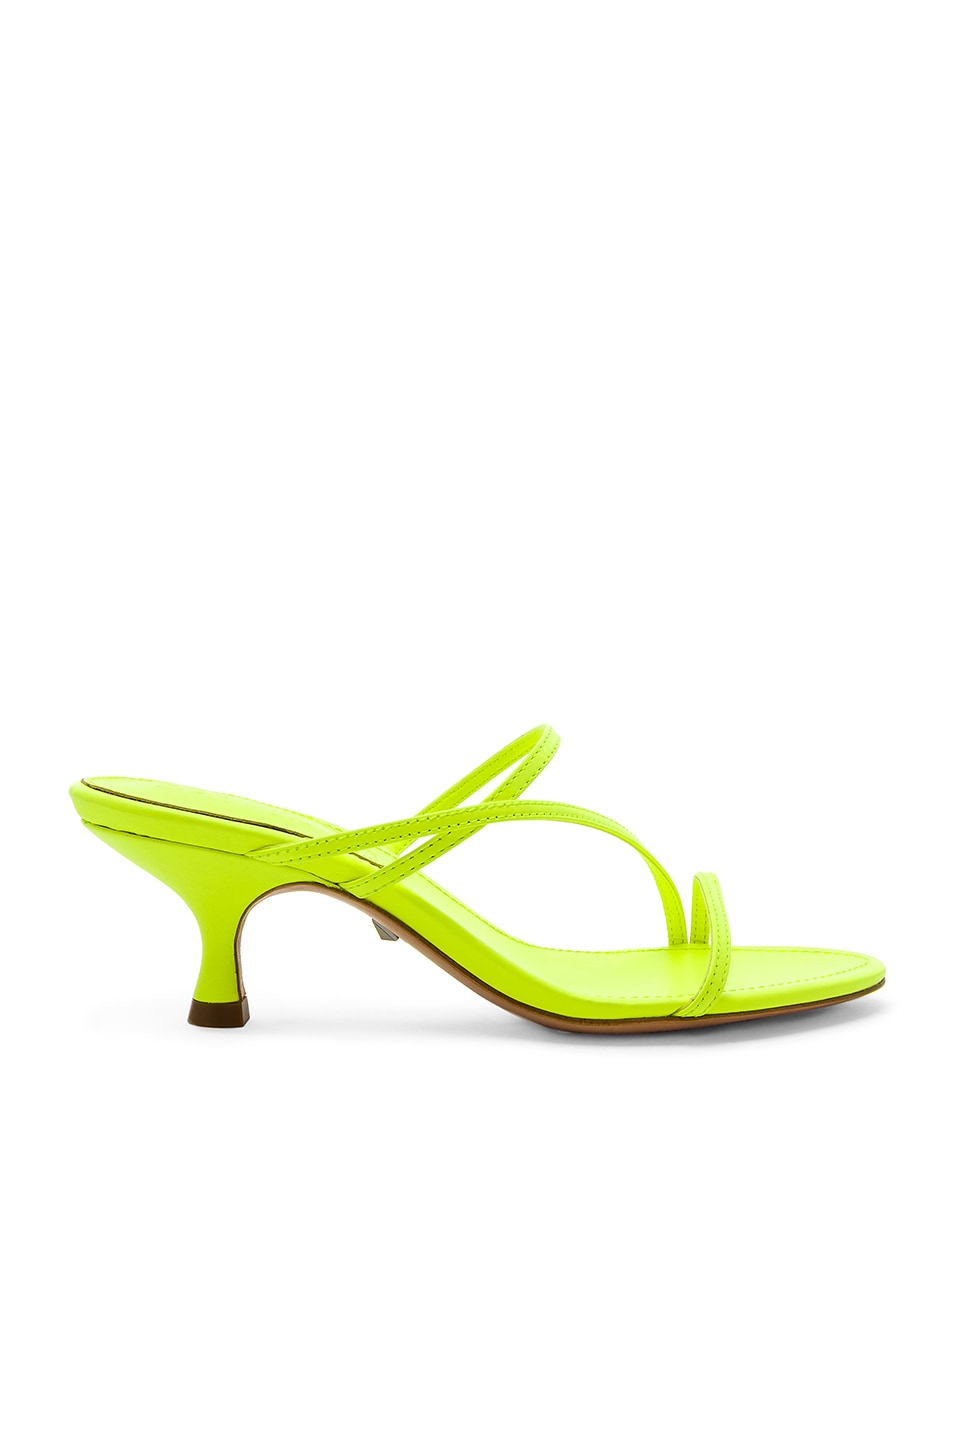 Schutz Evenise Sandal in Neon Yellow 